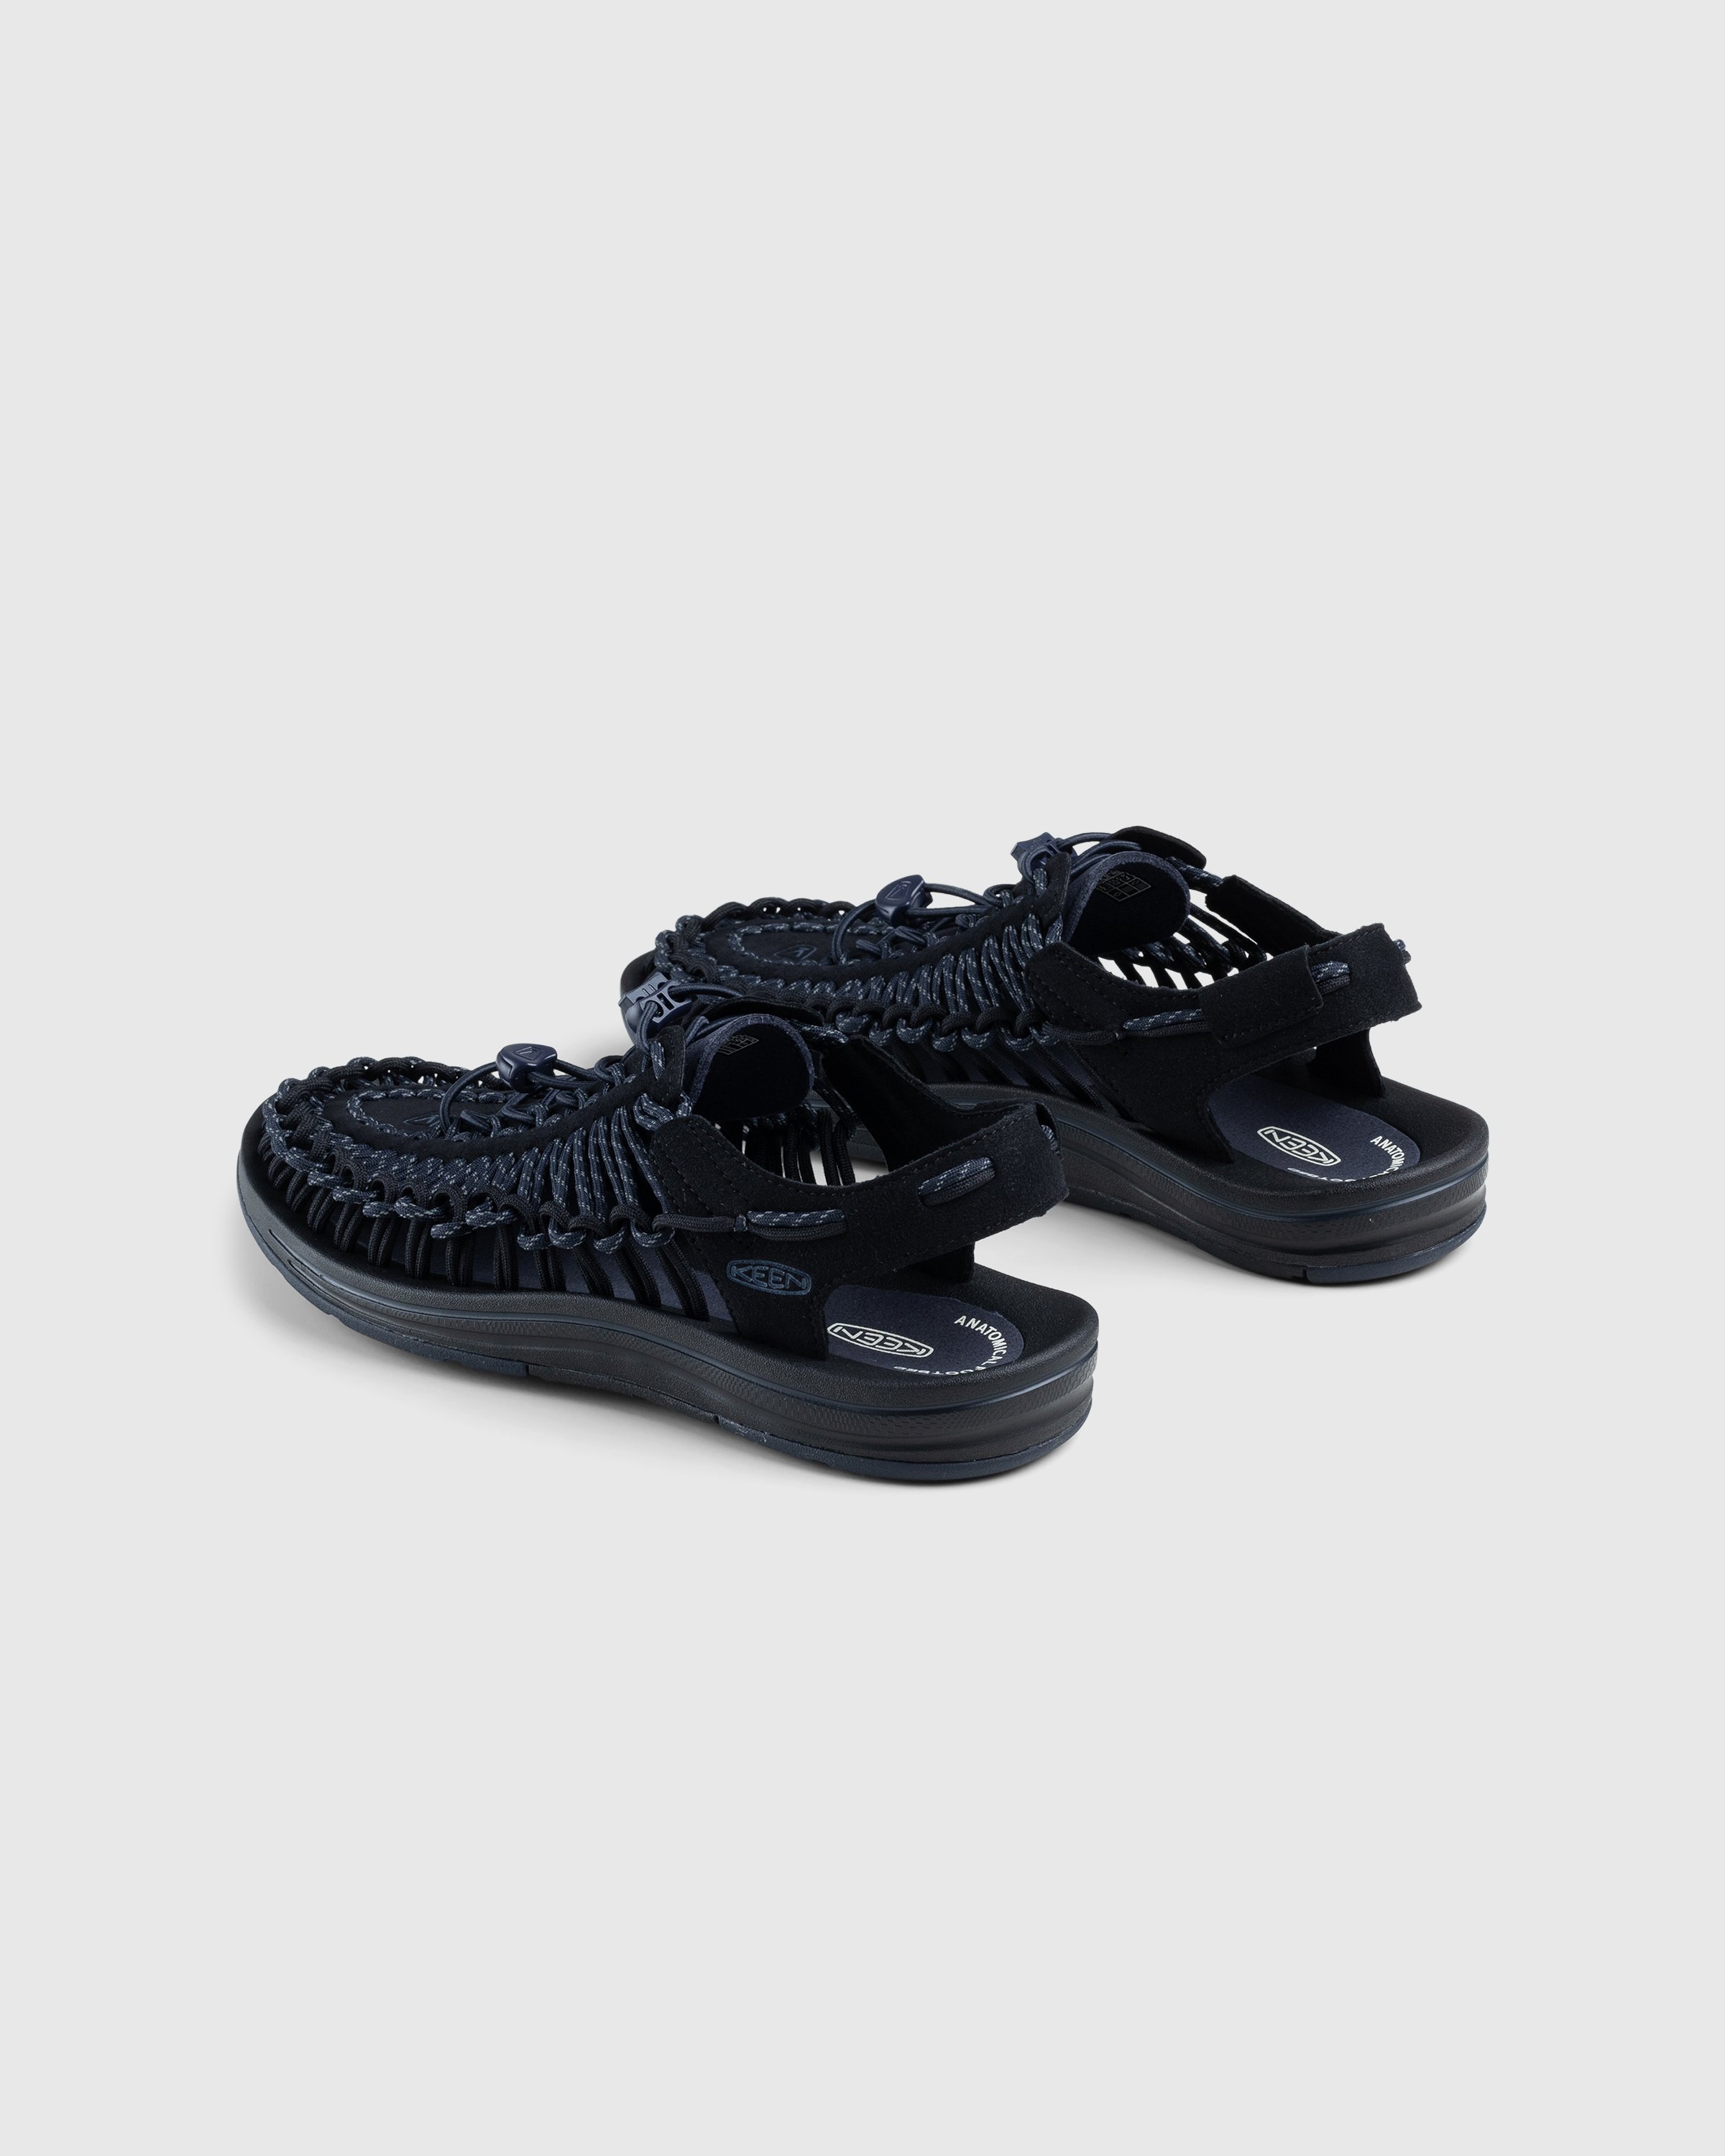 Keen x United Arrows - Uneek Black/Indigo - Footwear - Black - Image 4